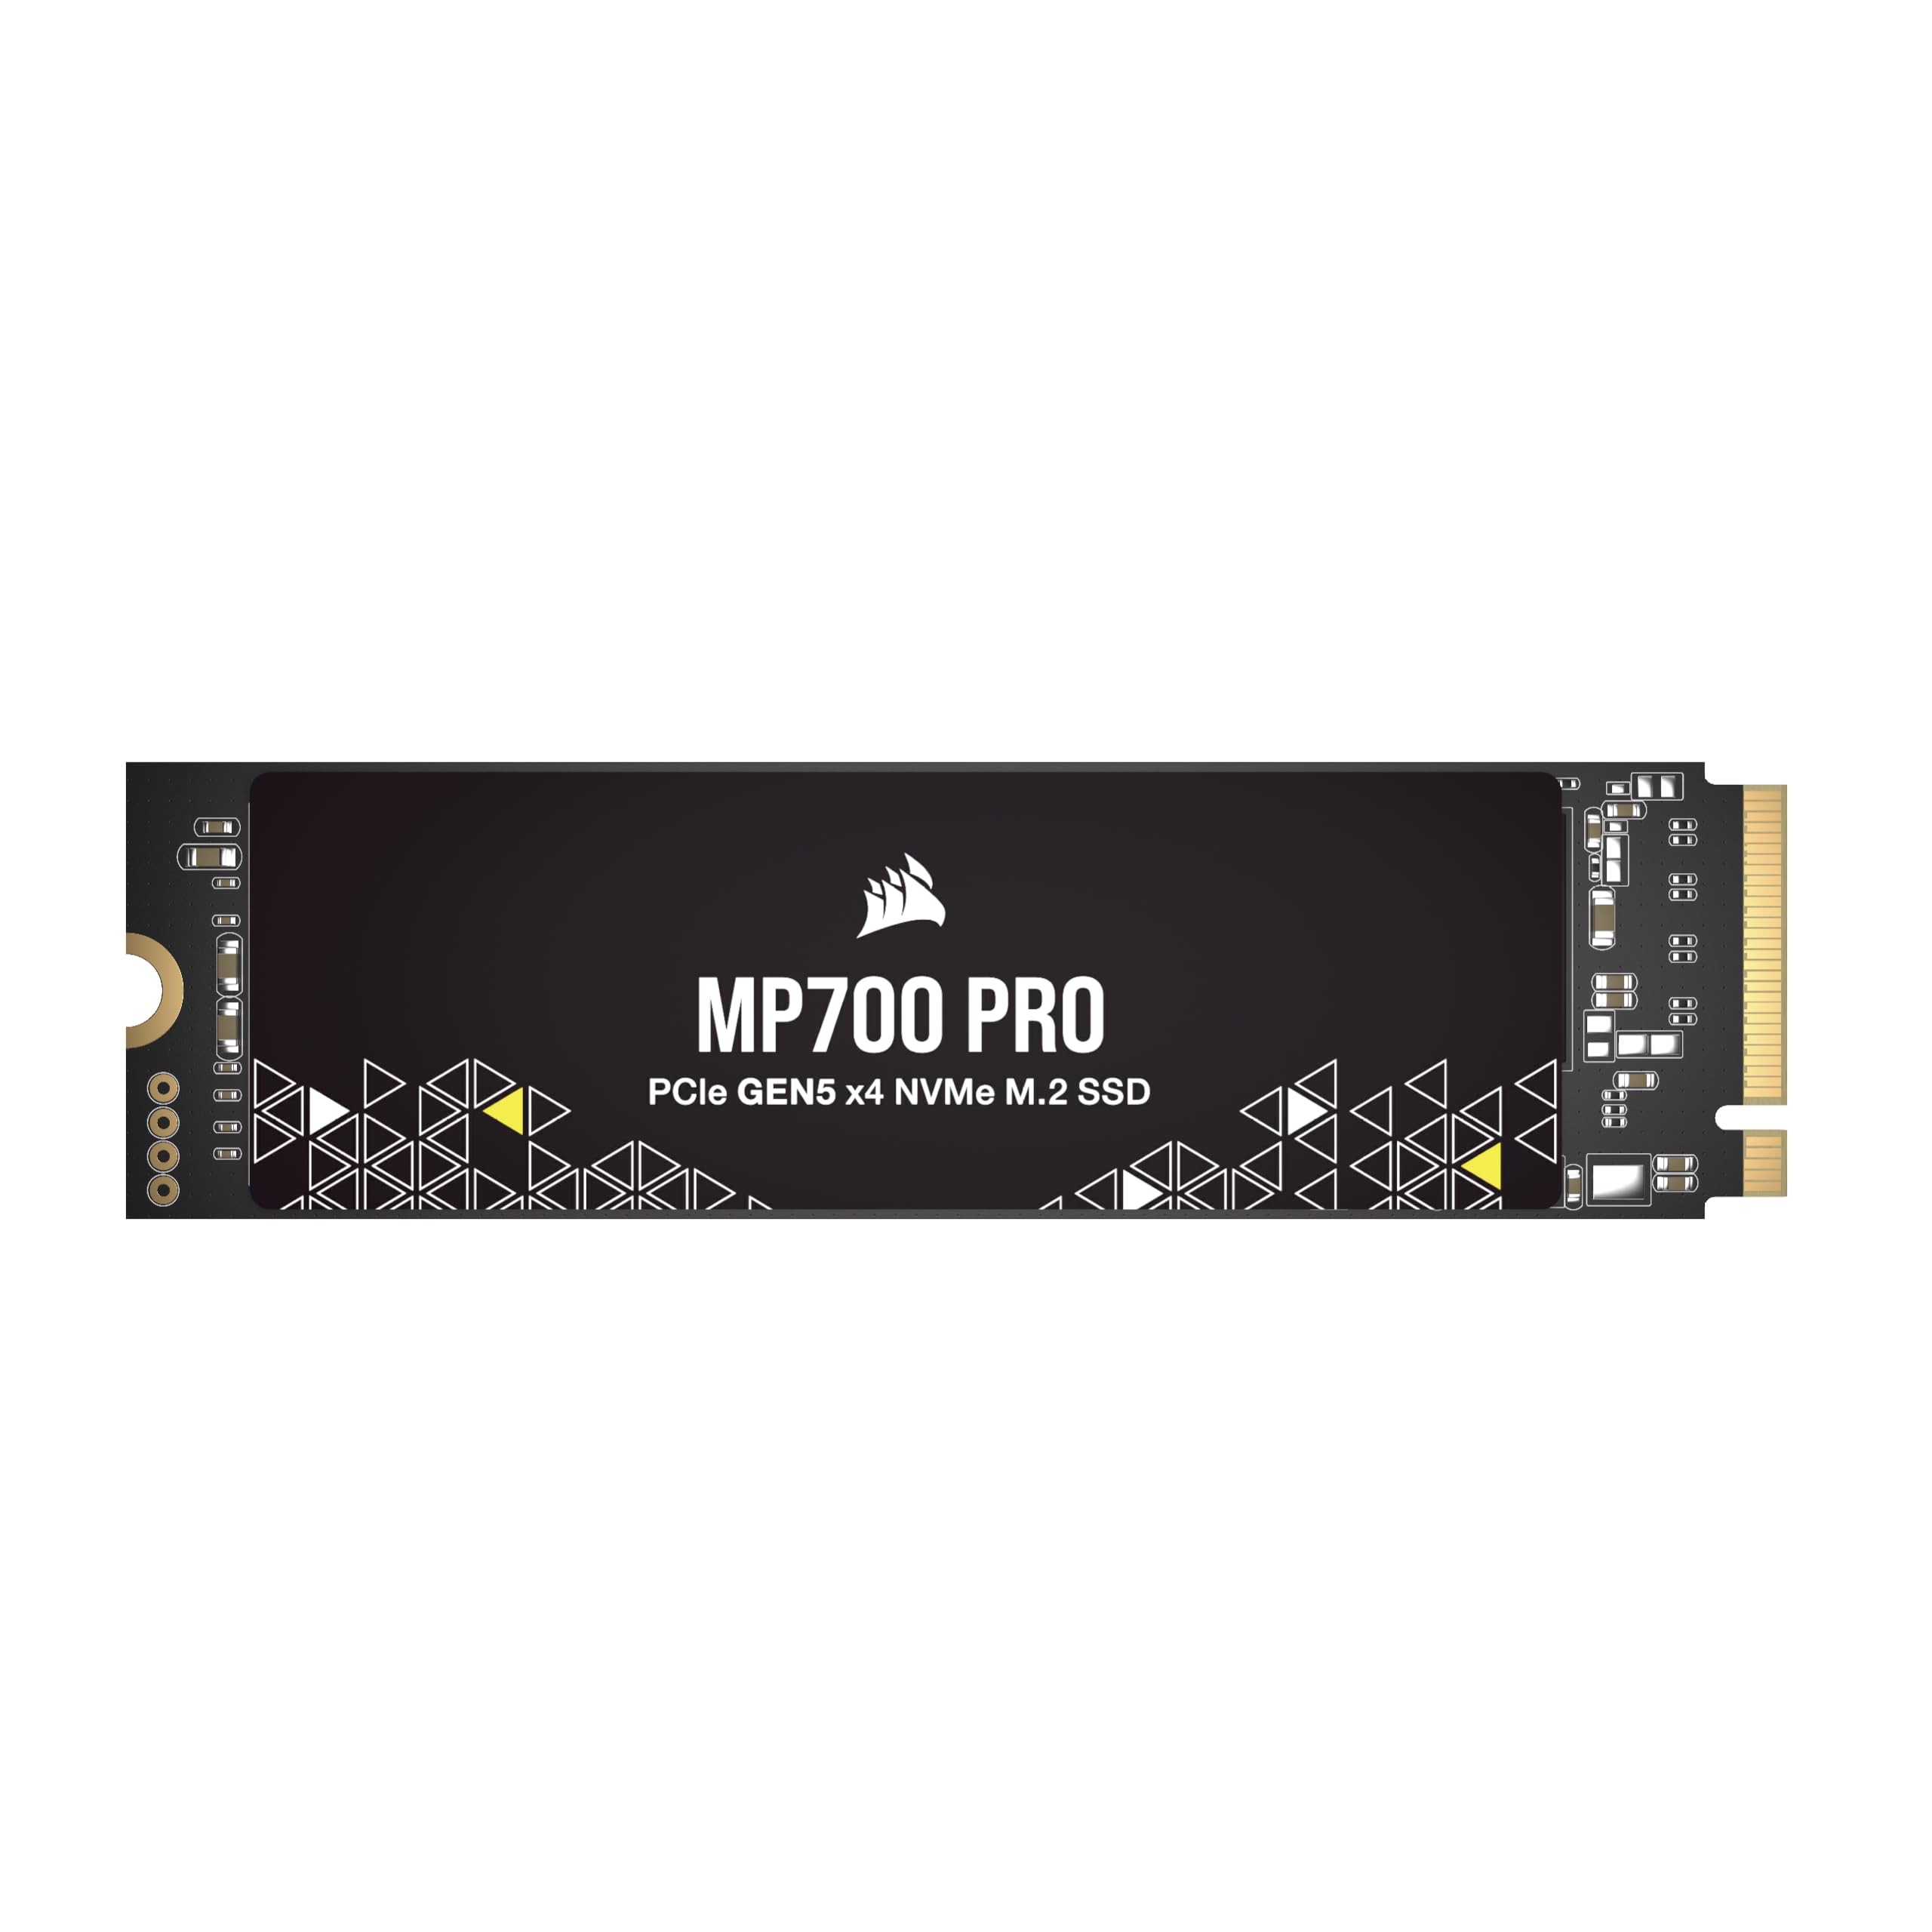 Corsair MP700 PRO 1TB M.2 PCIe Gen5 x4 NVMe 2.0 SSD – M.2 2280 – Up to 11,700MB/sec Sequential Read – High-Density TLC NAND – Black